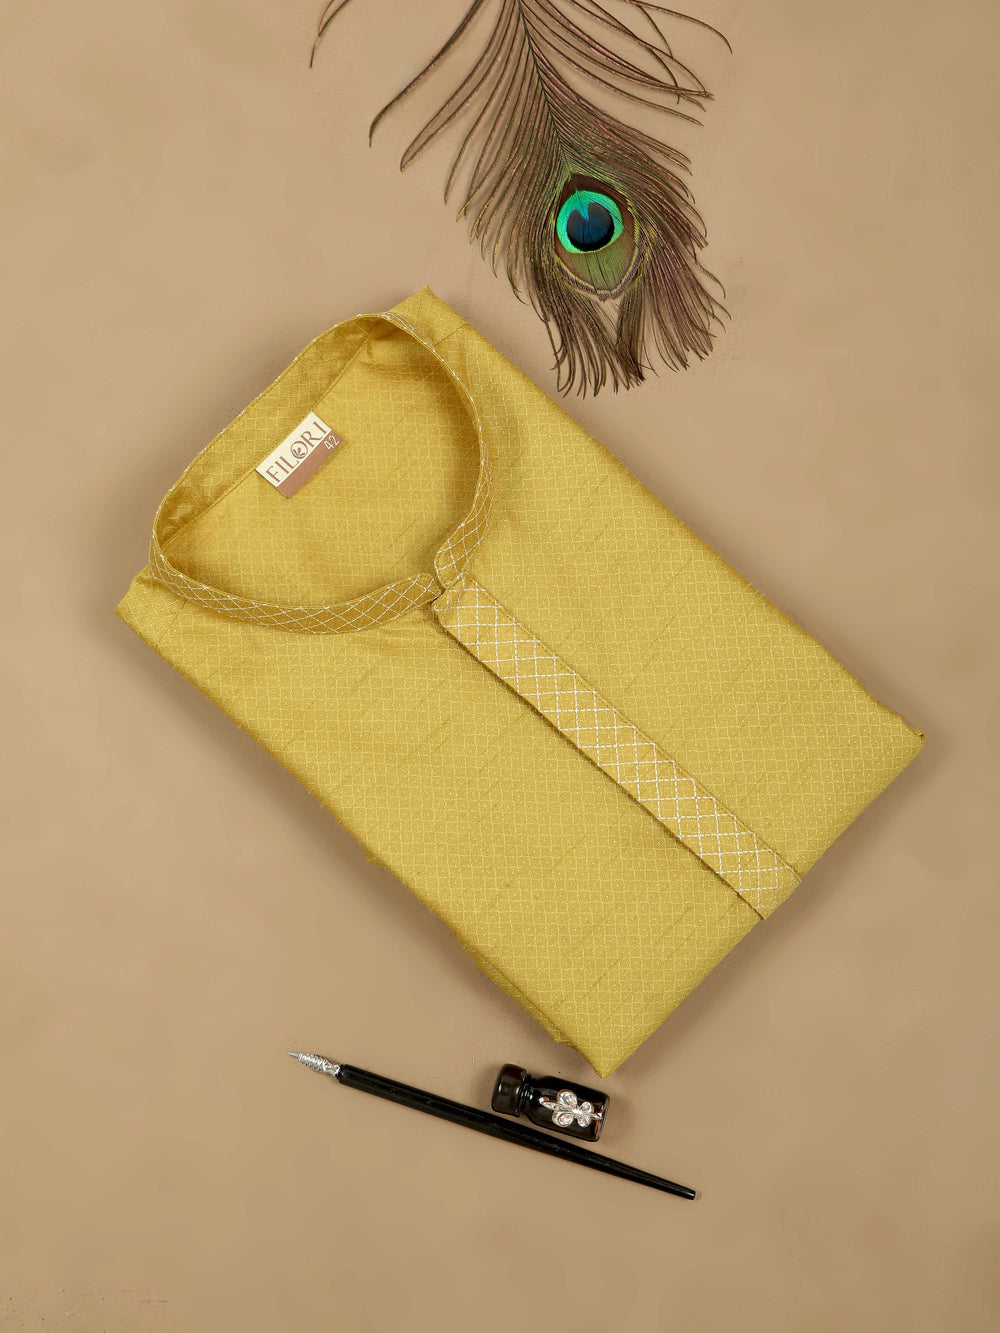 Mustard Yellow Embroidered long kurta for men